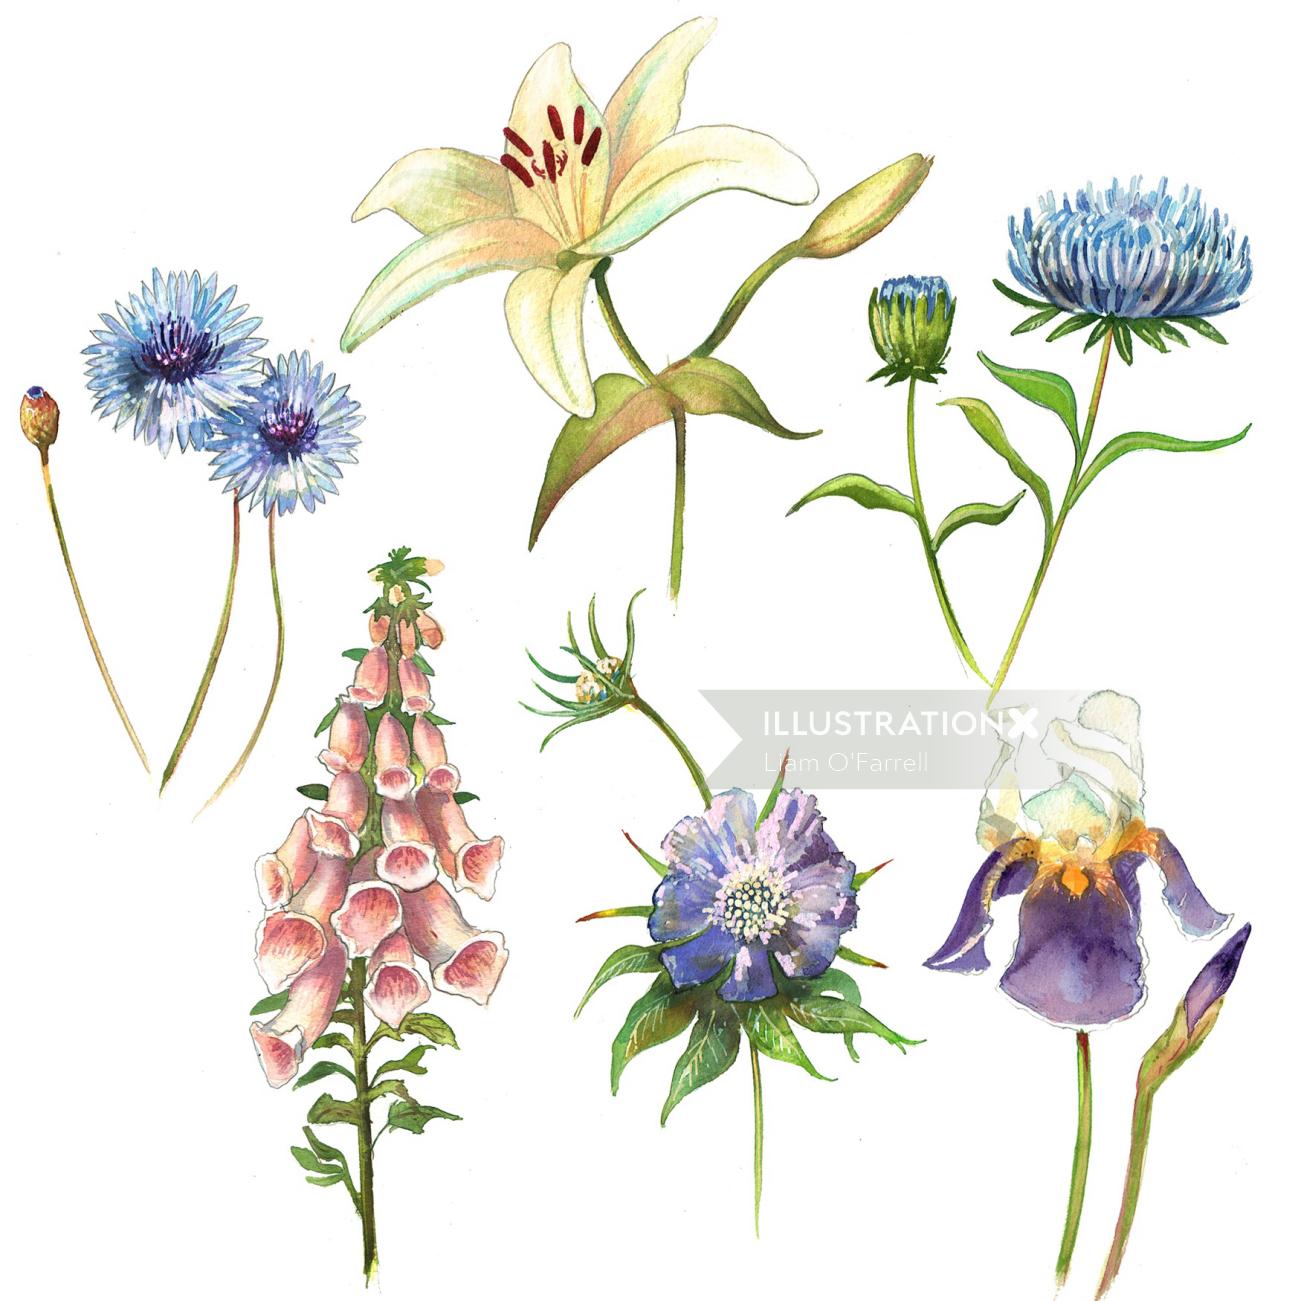 Nature illustration about garden flowers